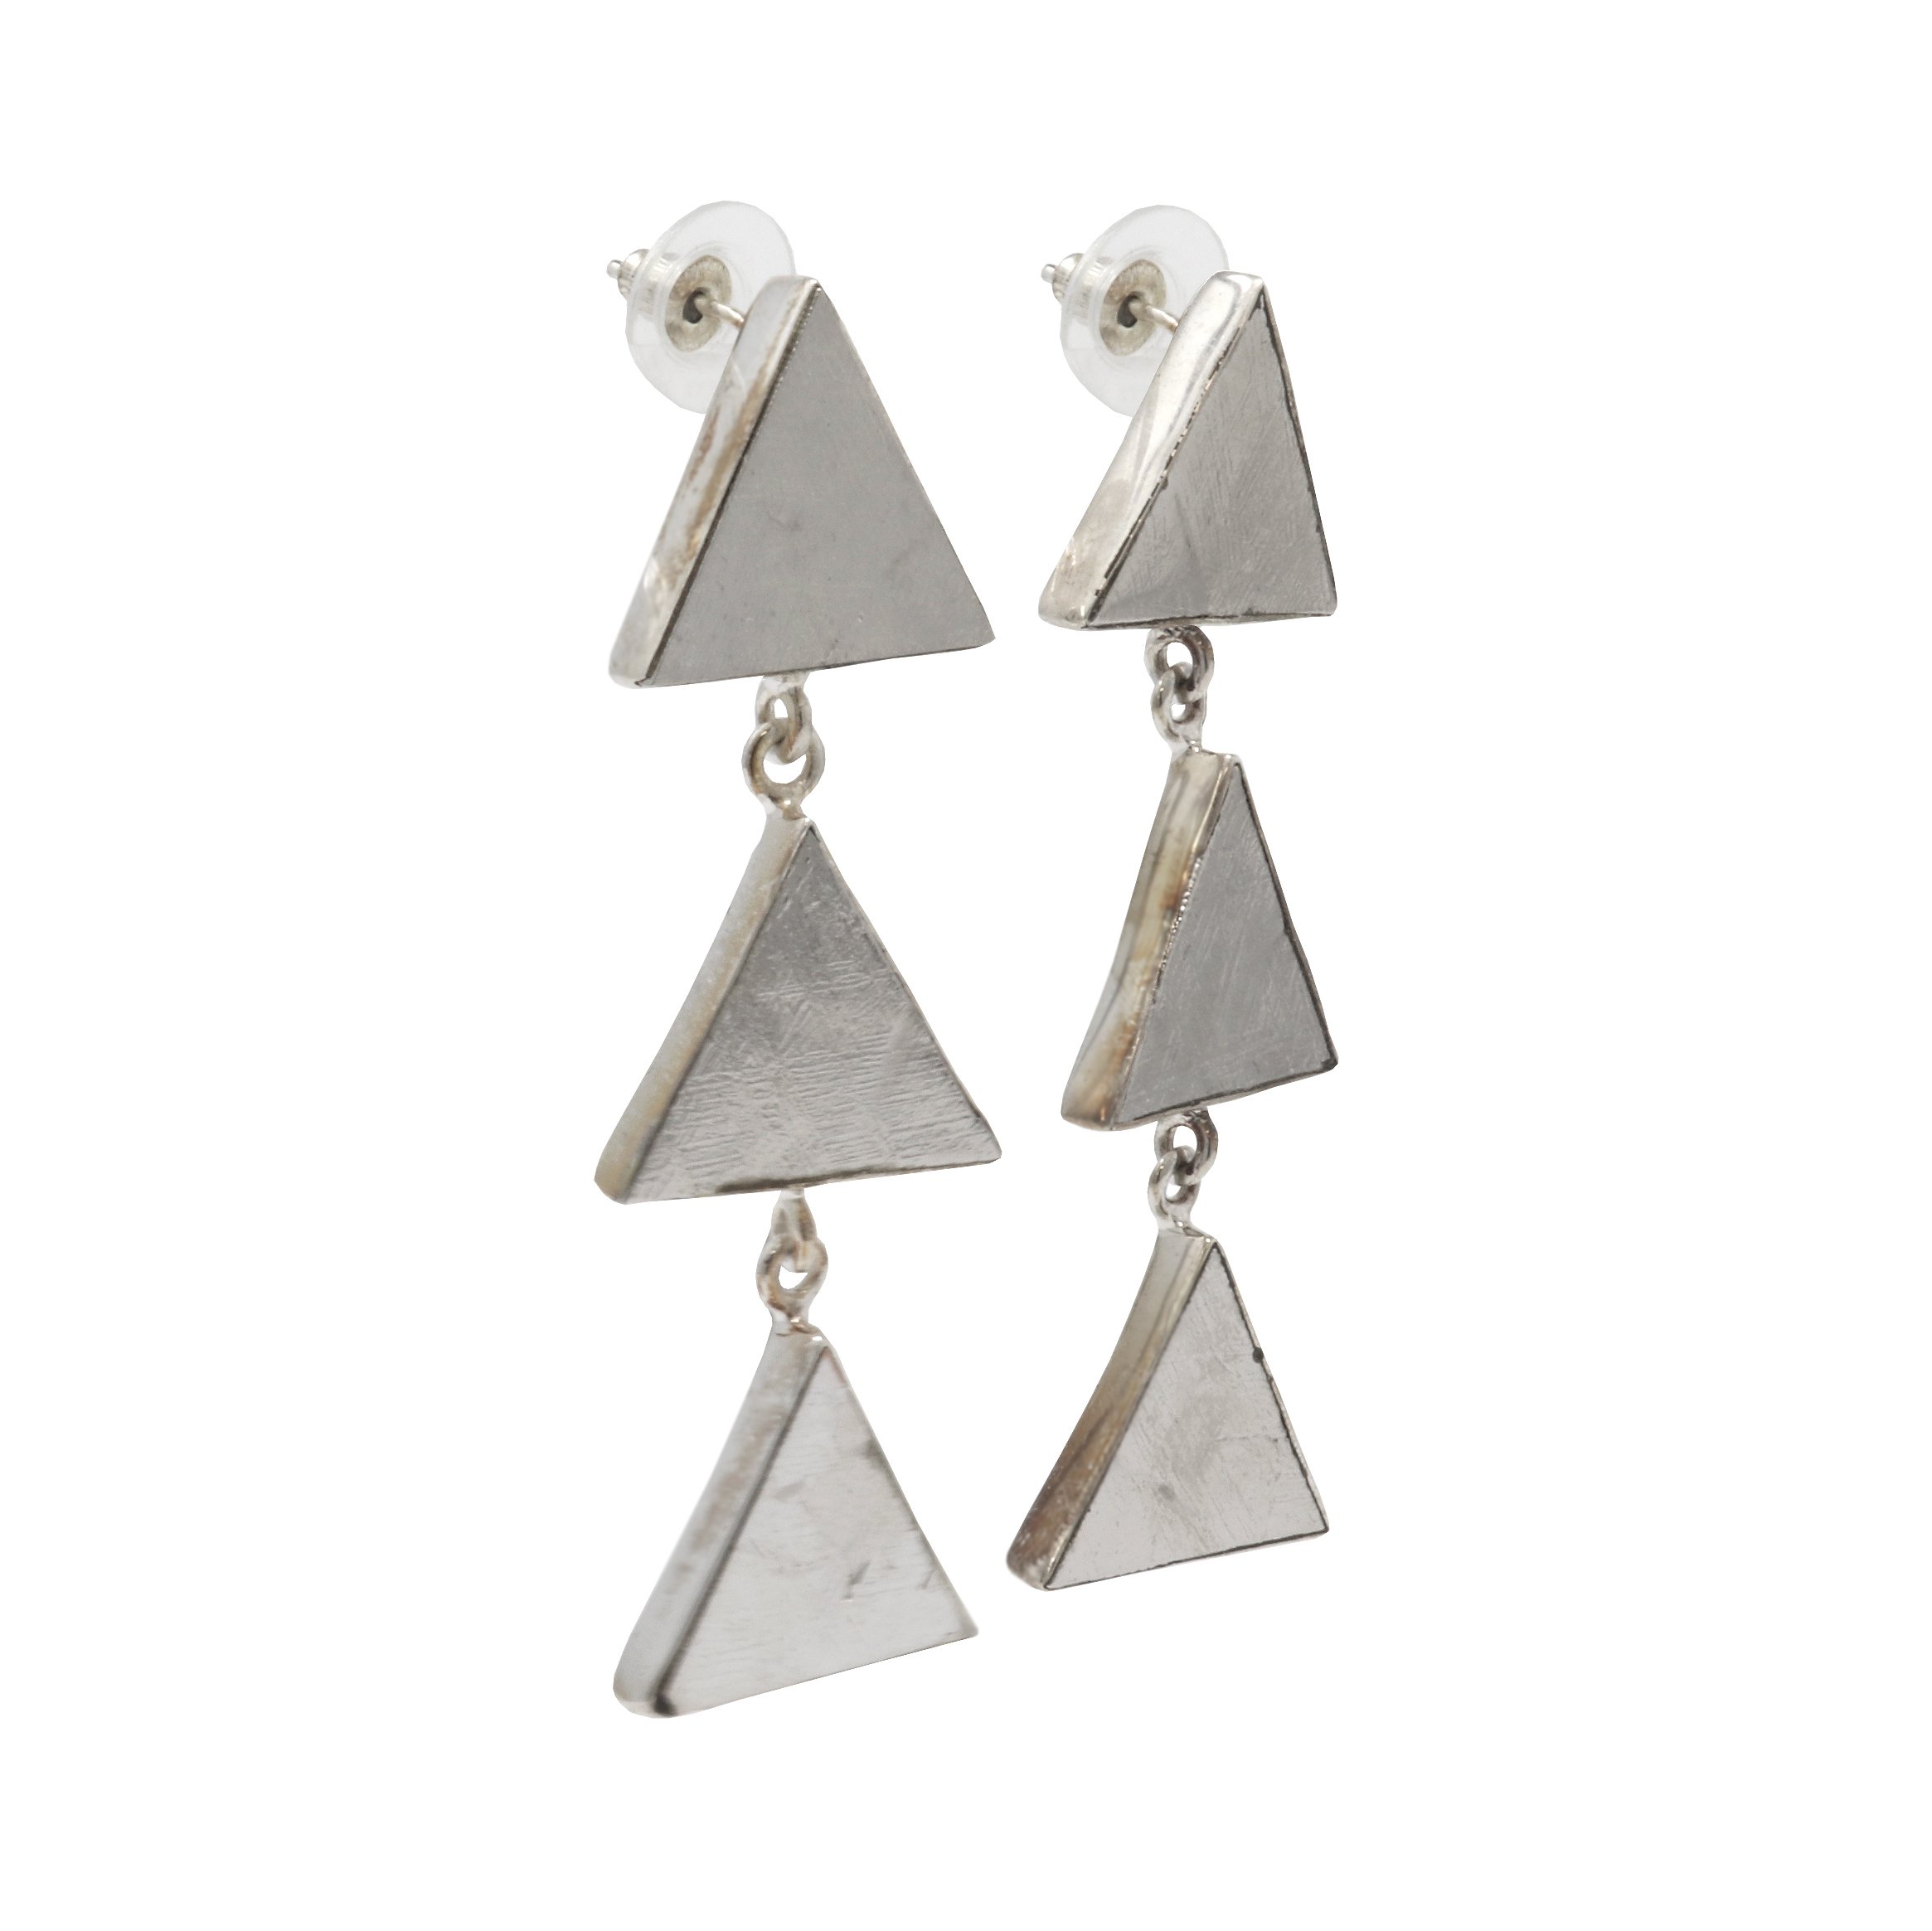 Muonionalusta Meteorite Dangle Earrings - 3 Triangles With Silver Bezels Dangling